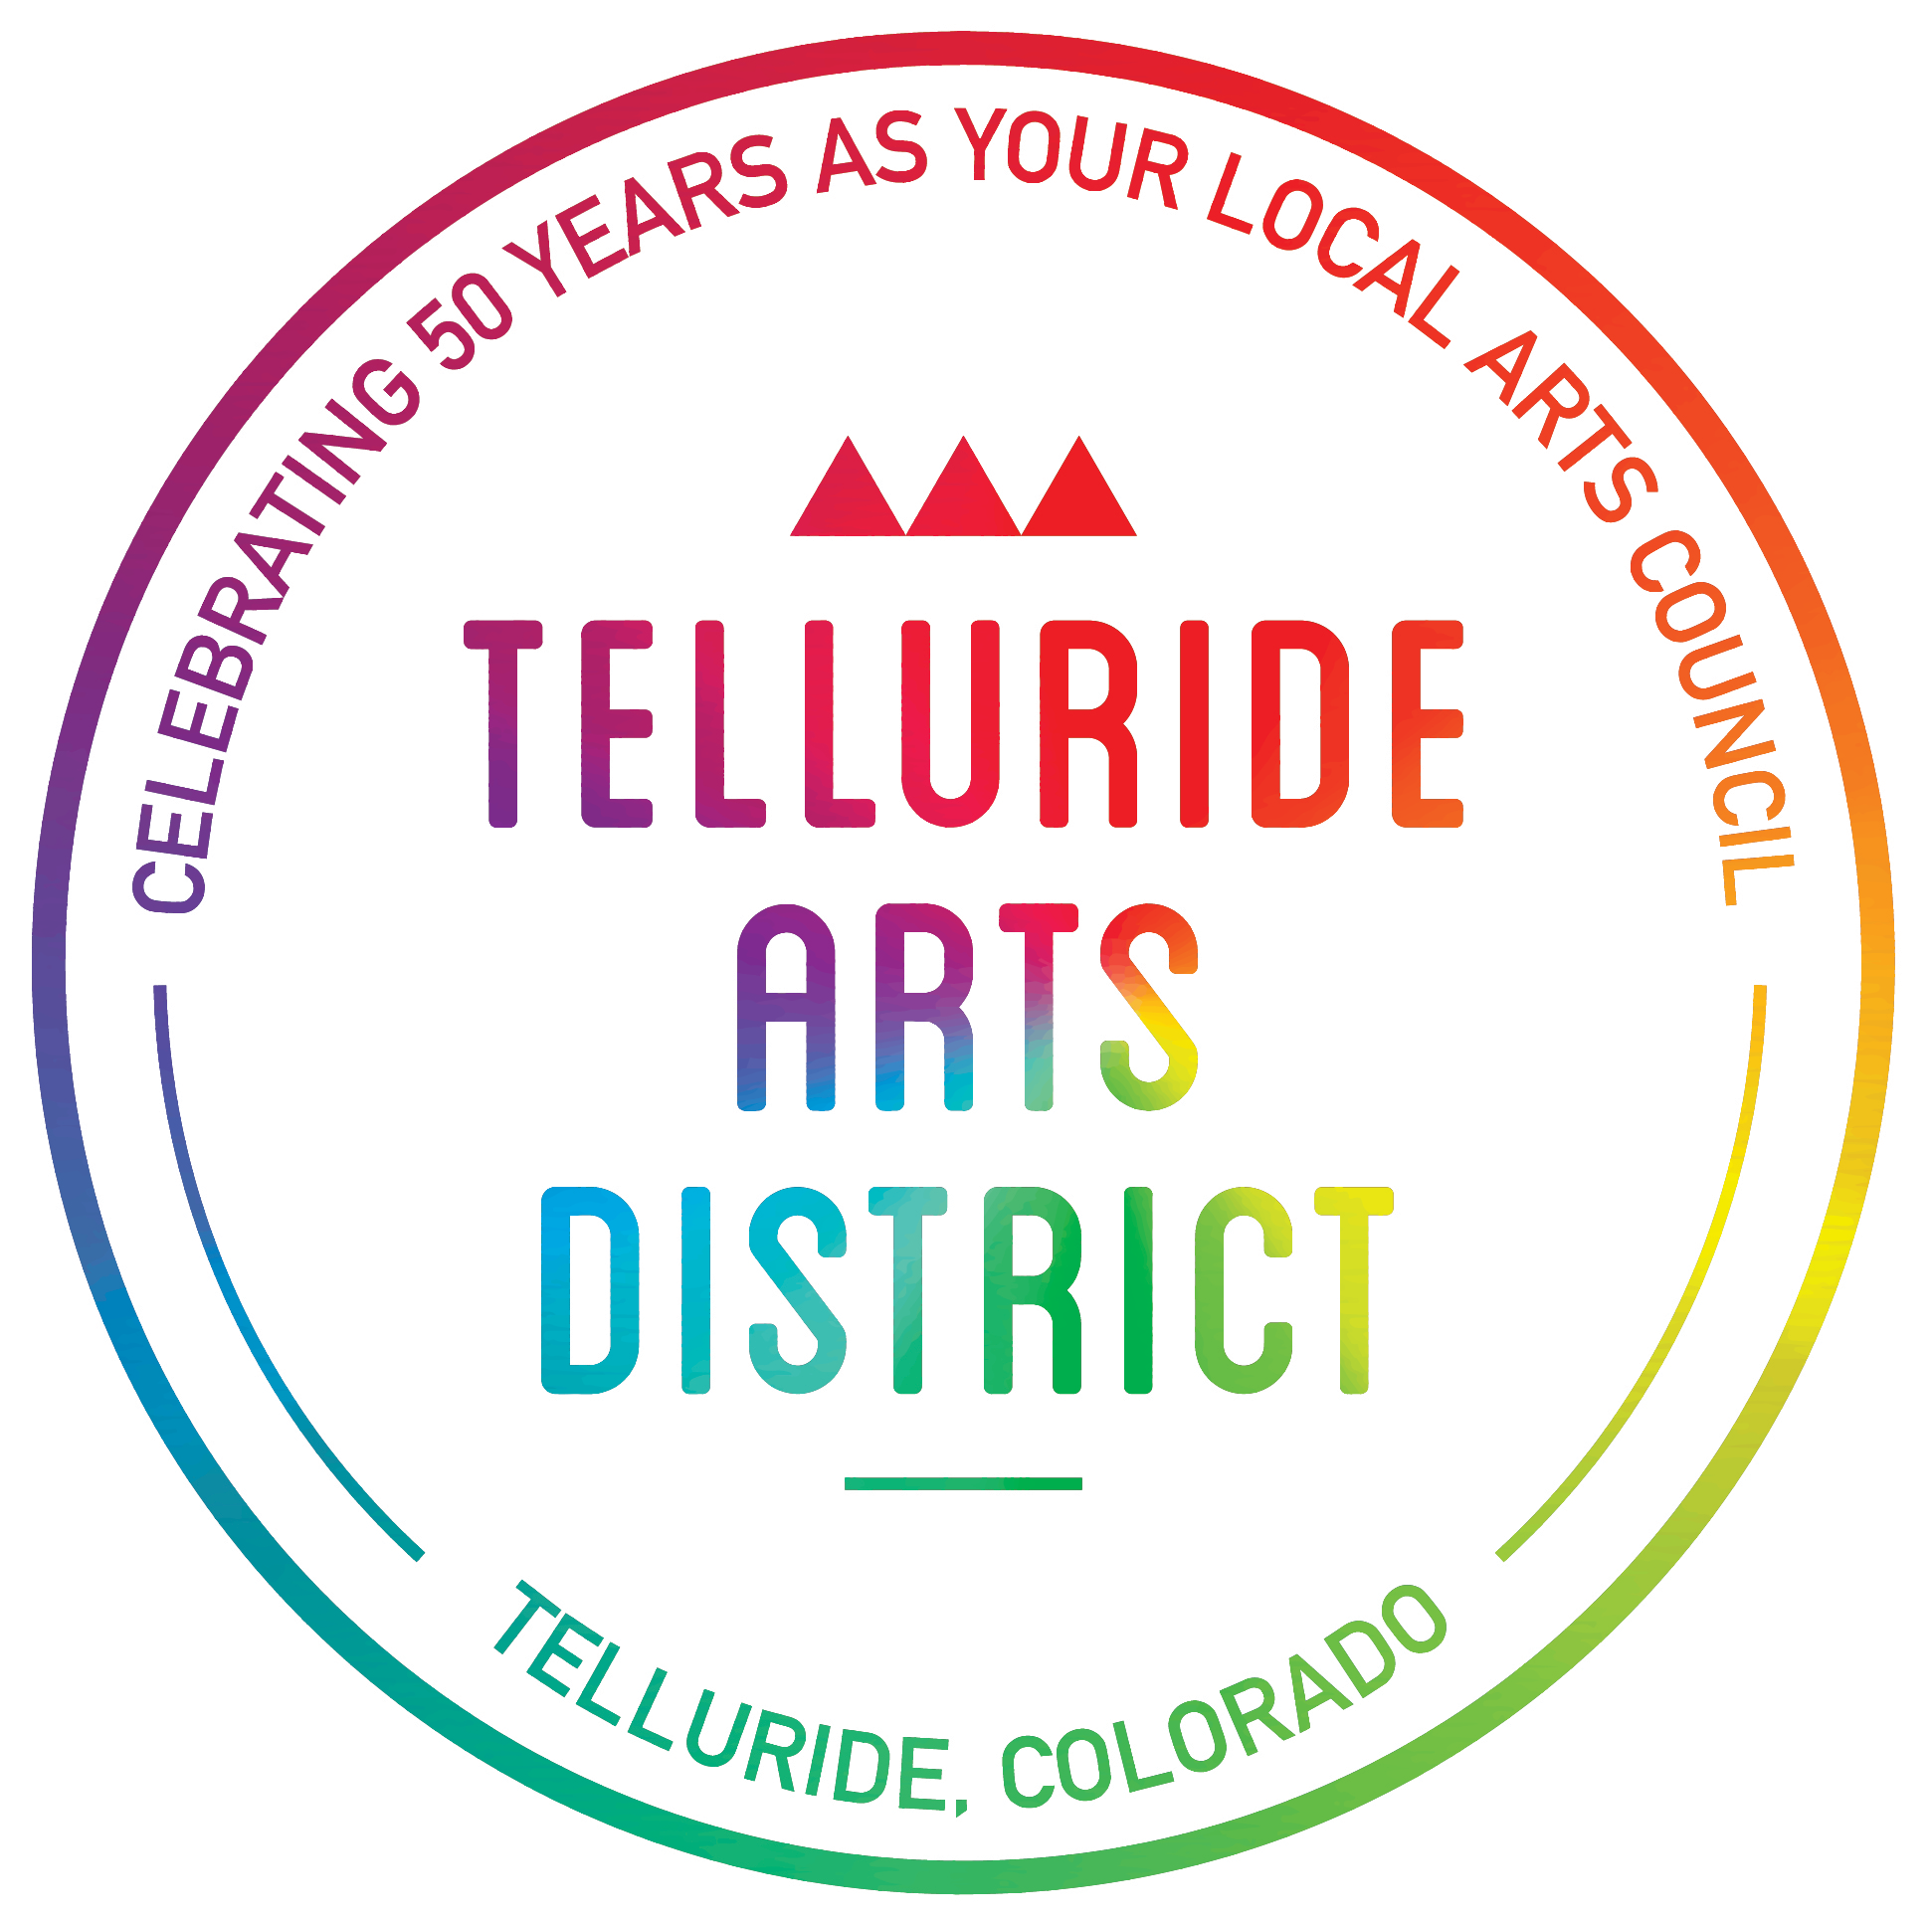 Telluride Arts District